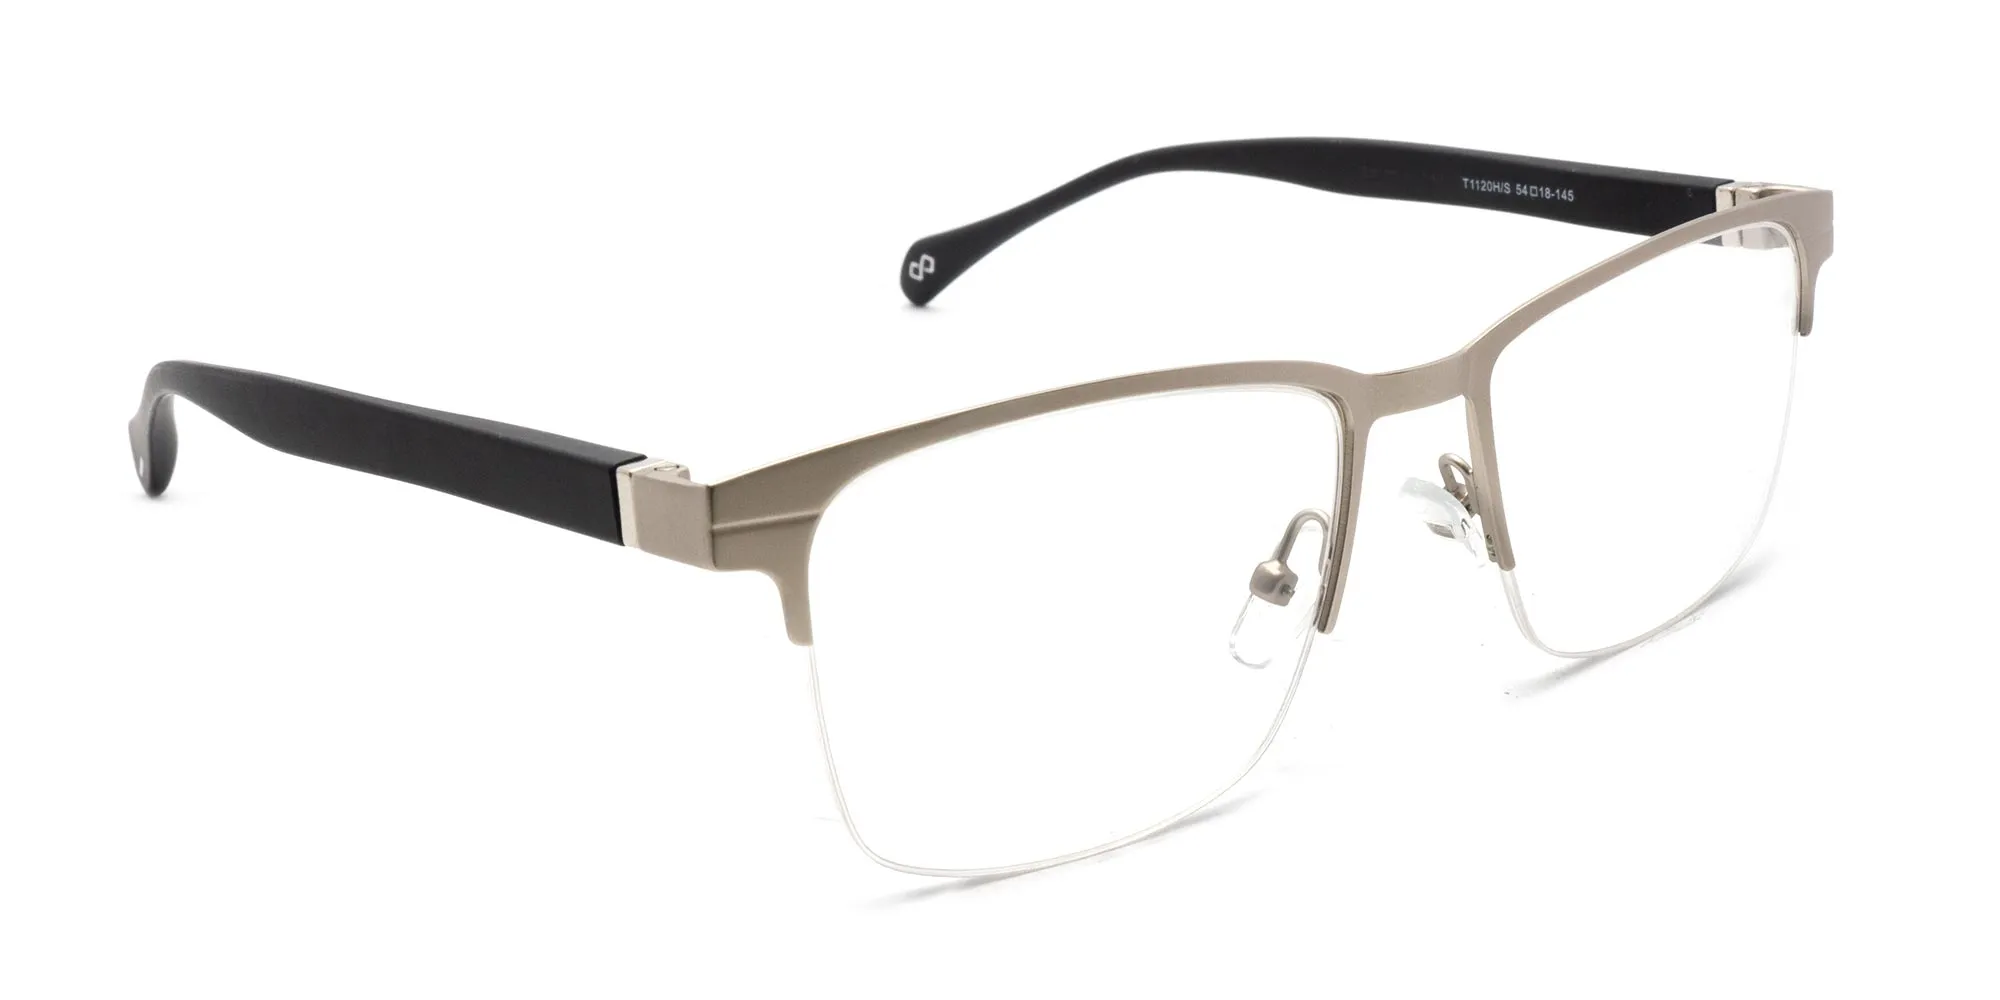 MALDON 5 - Black And Silver Half Rim Rectangular Glasses | Specscart.®